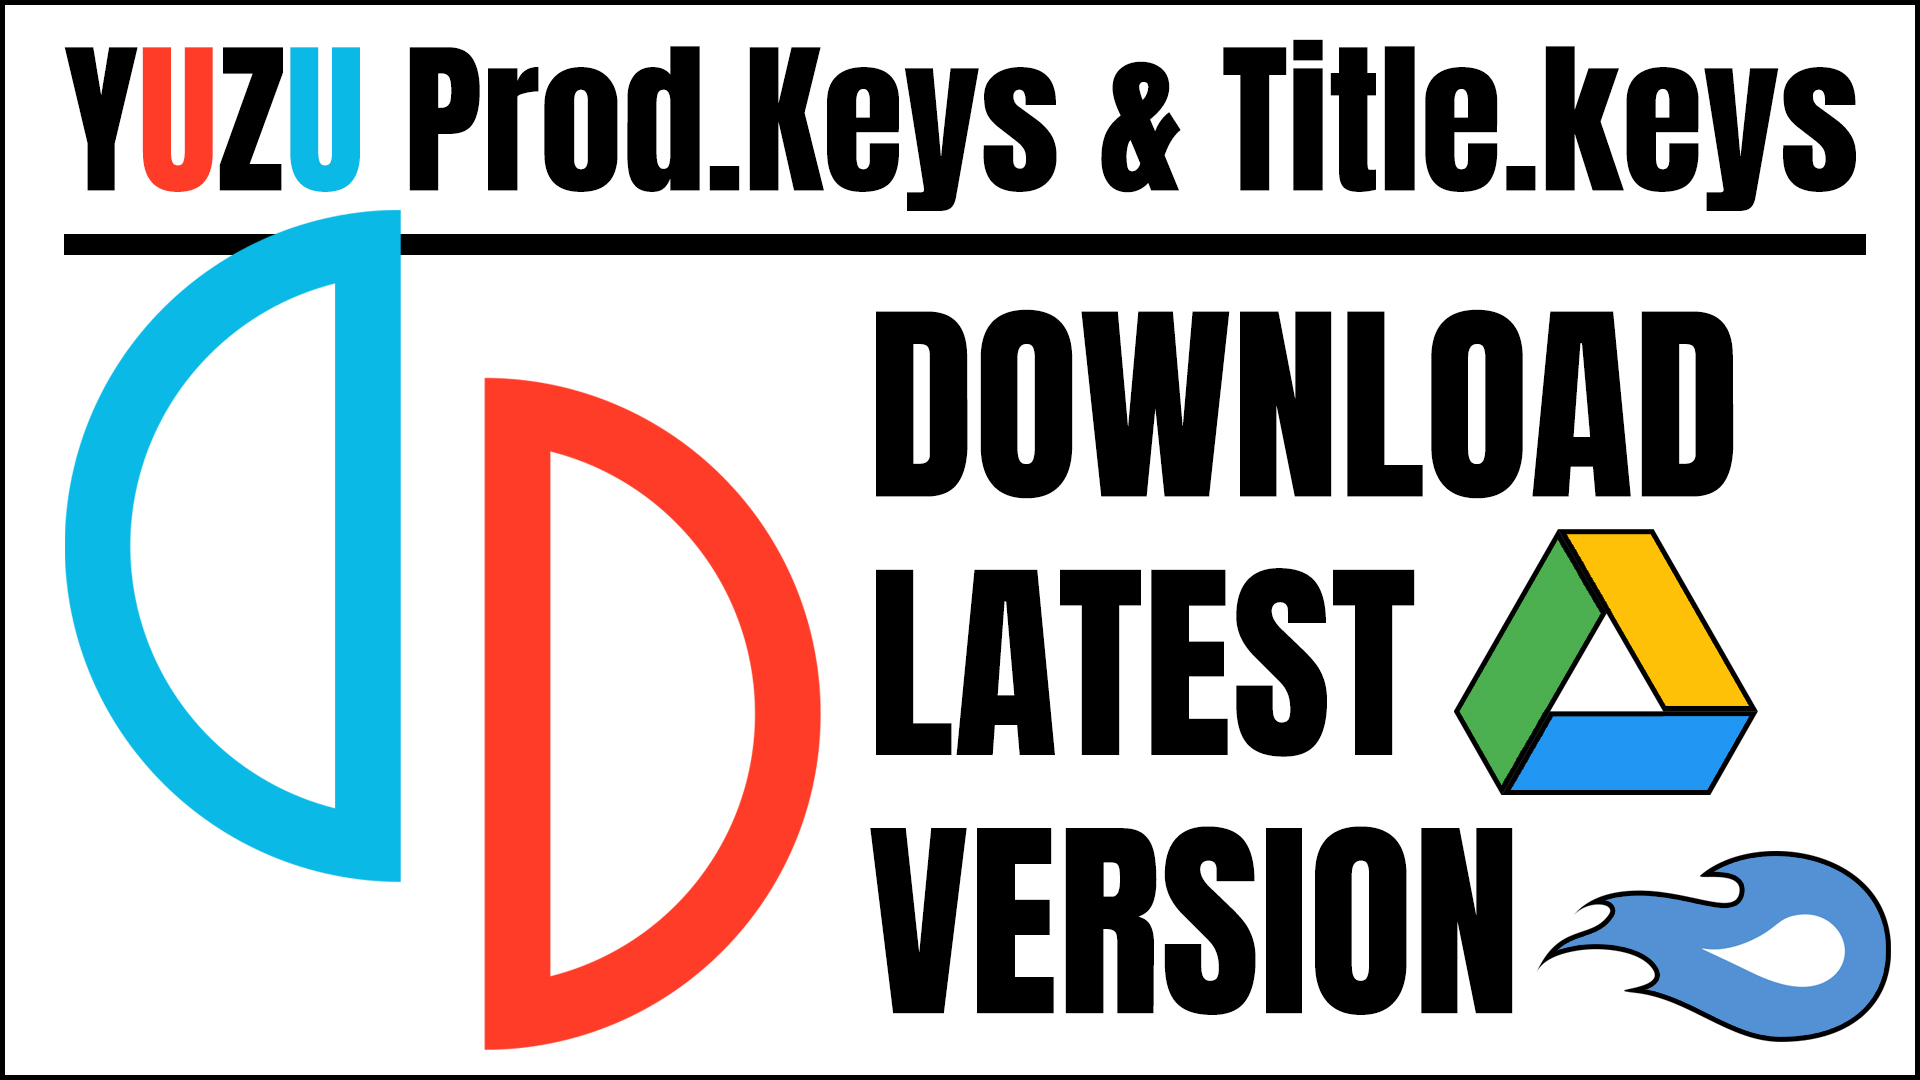 Yuzu Prod.Keys & Title.keys Download Latest Version